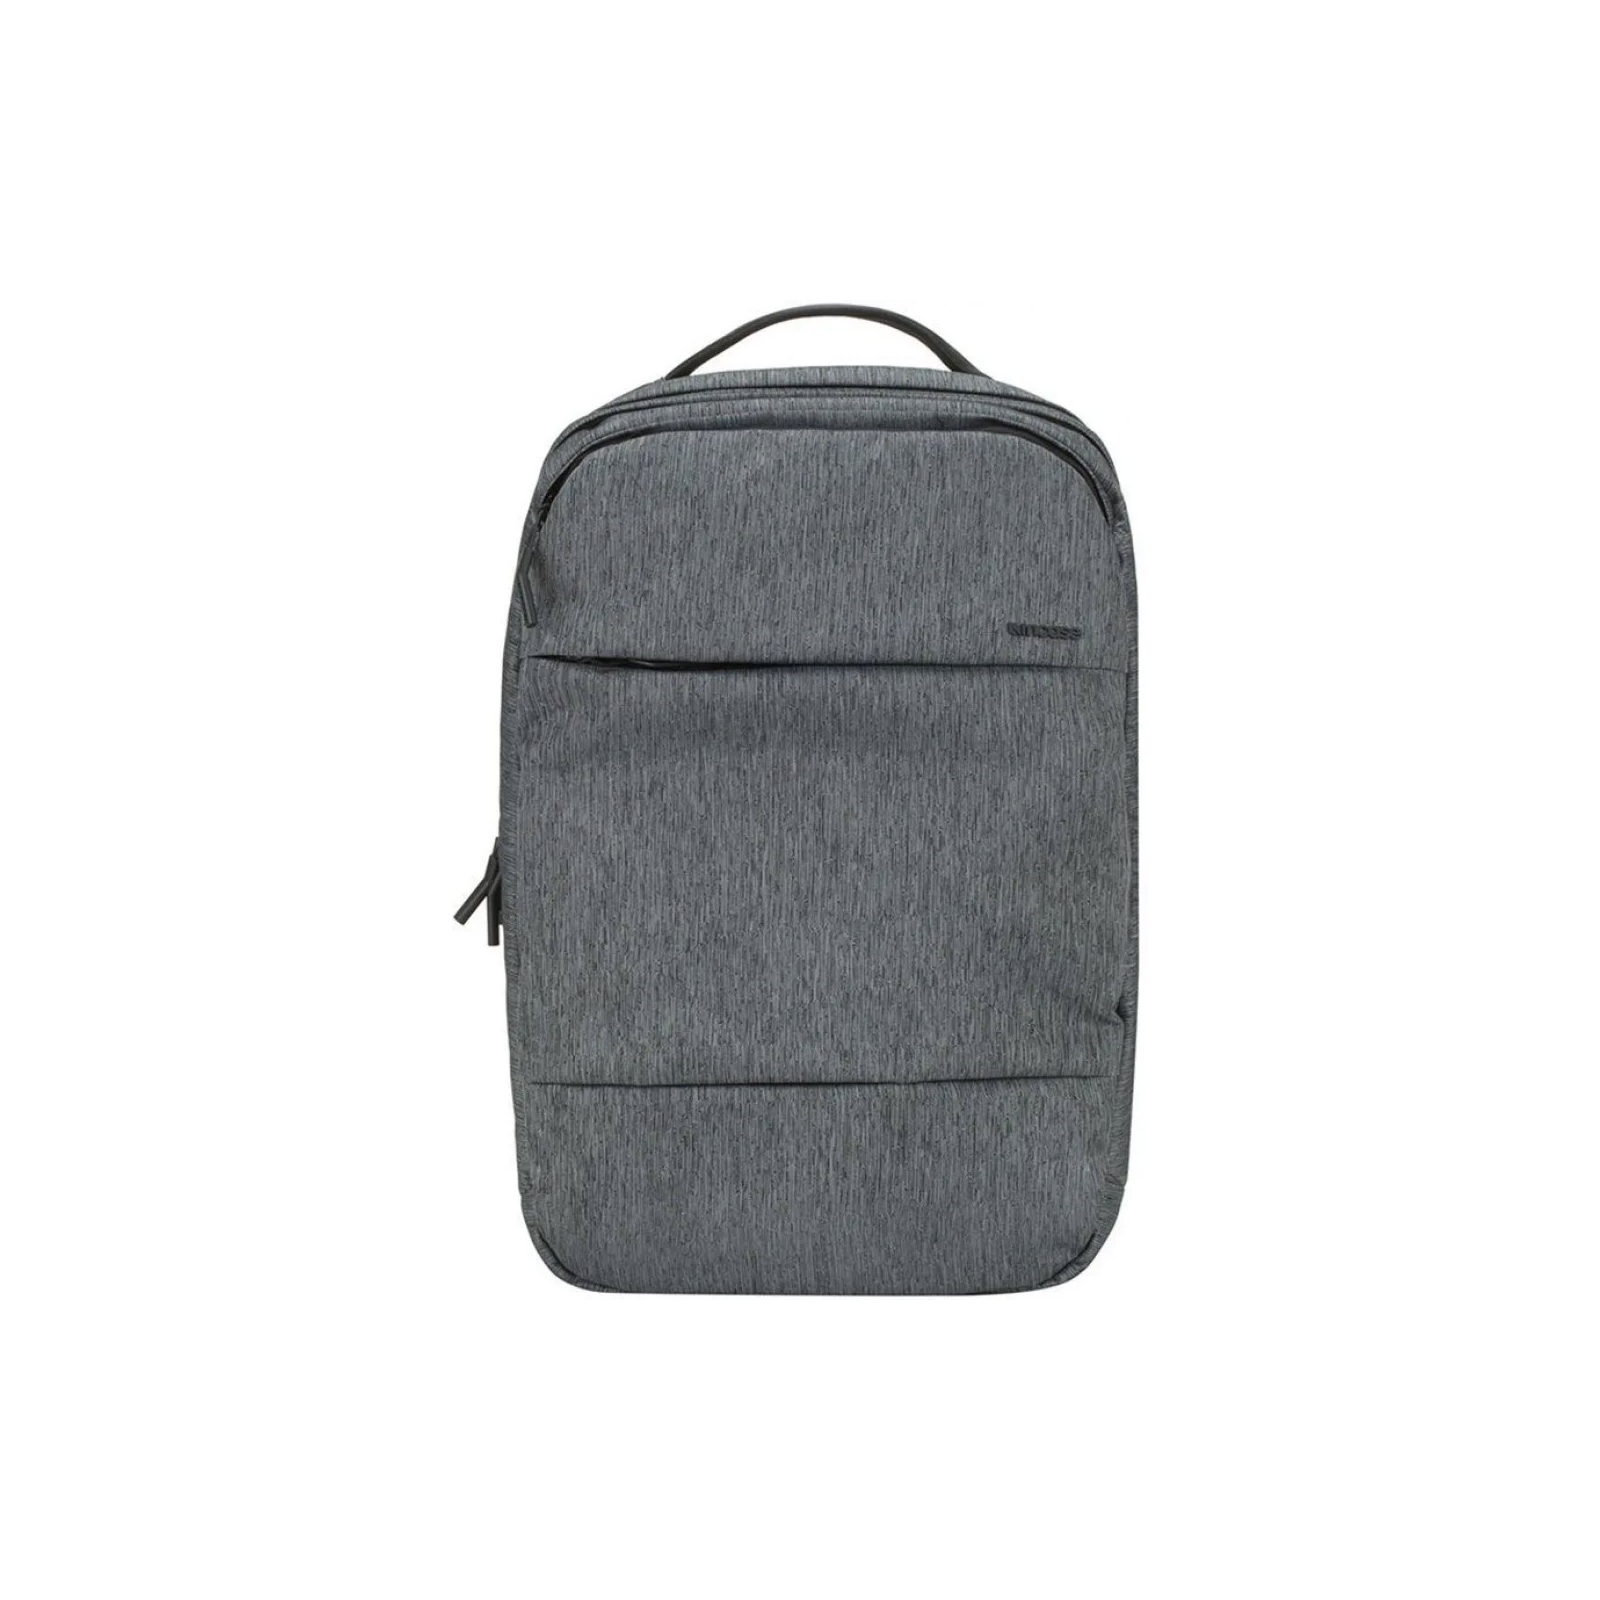 Рюкзак для ноутбука Incase 17" City Backpack Heather Black (CL55569) изображение 4